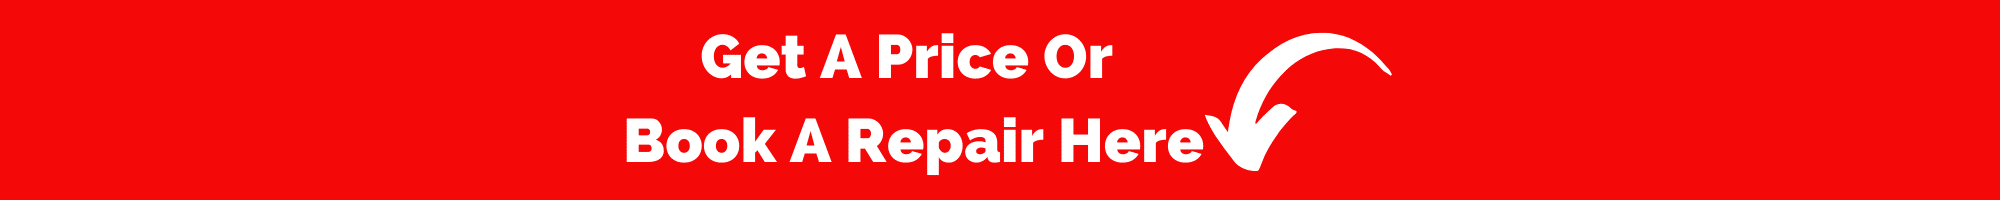 get a price or book a repair here